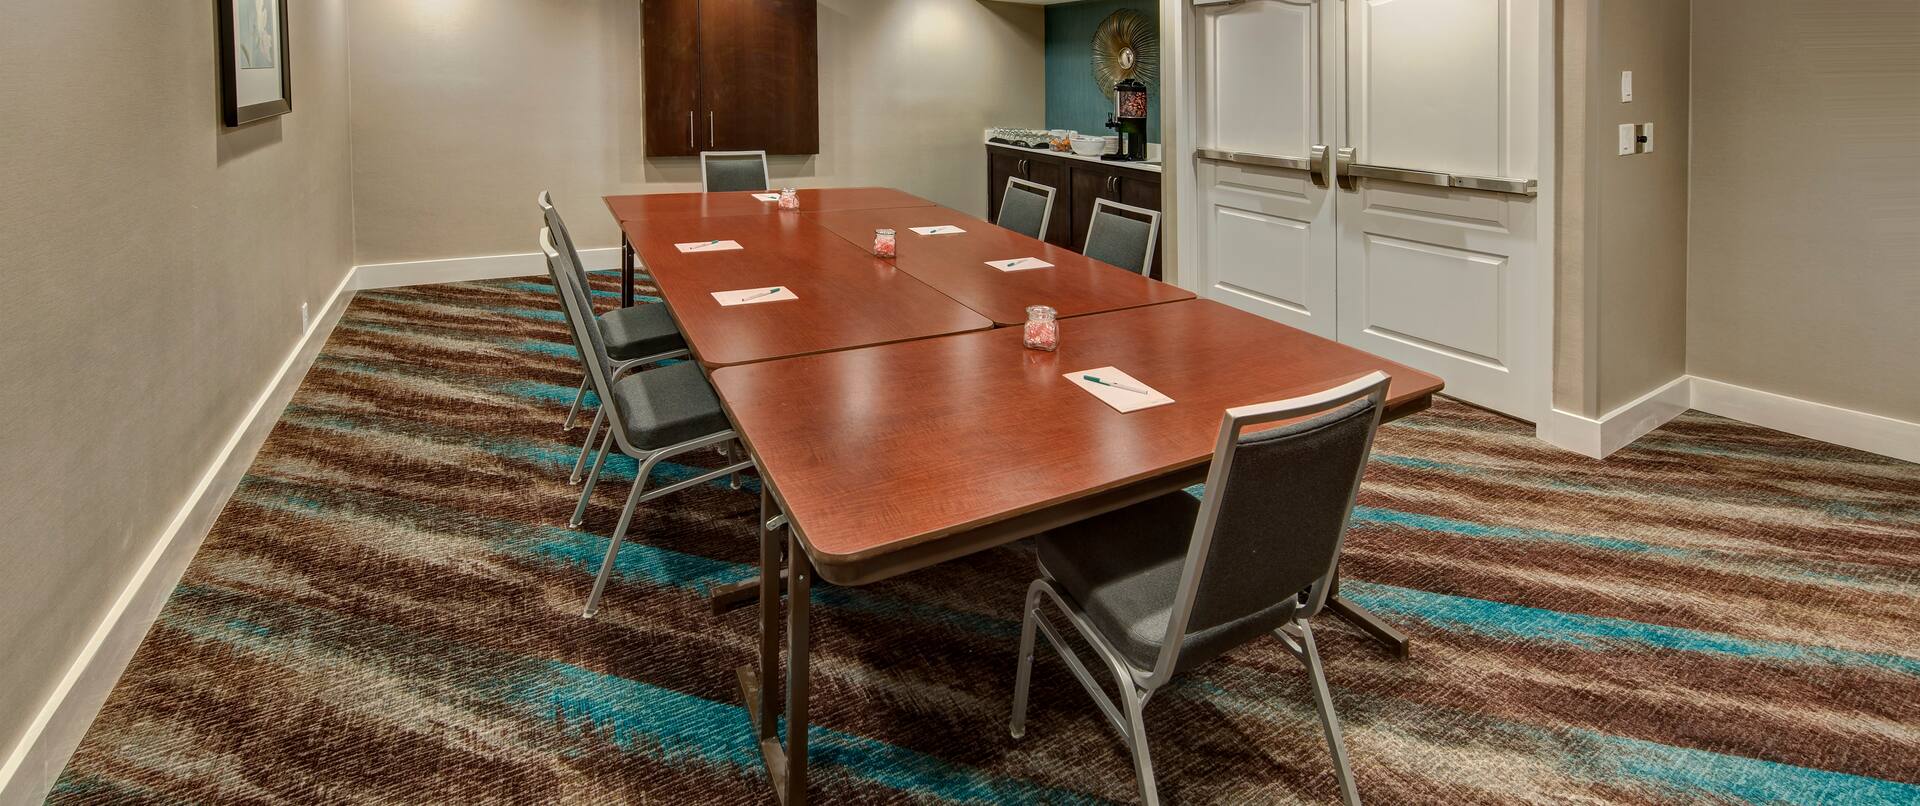 Meeting Room, Boardroom